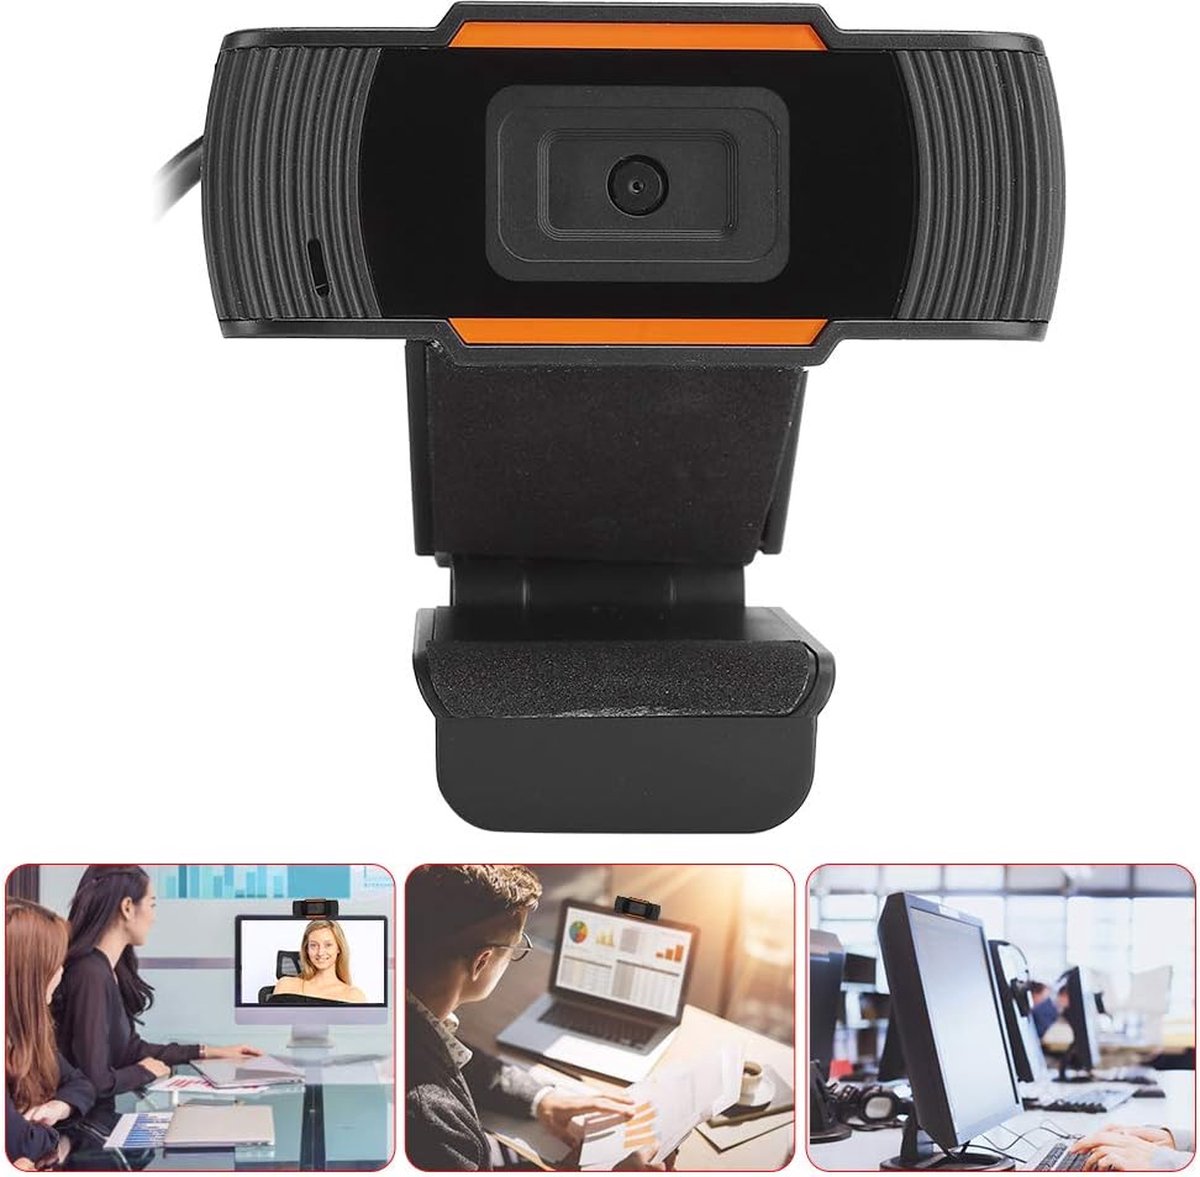 Webcam - Microfoon - FULL HD - Webcams voor pc - Laptop en PC Camera - USB 2.0 - Computer Camera - Windows en Mac